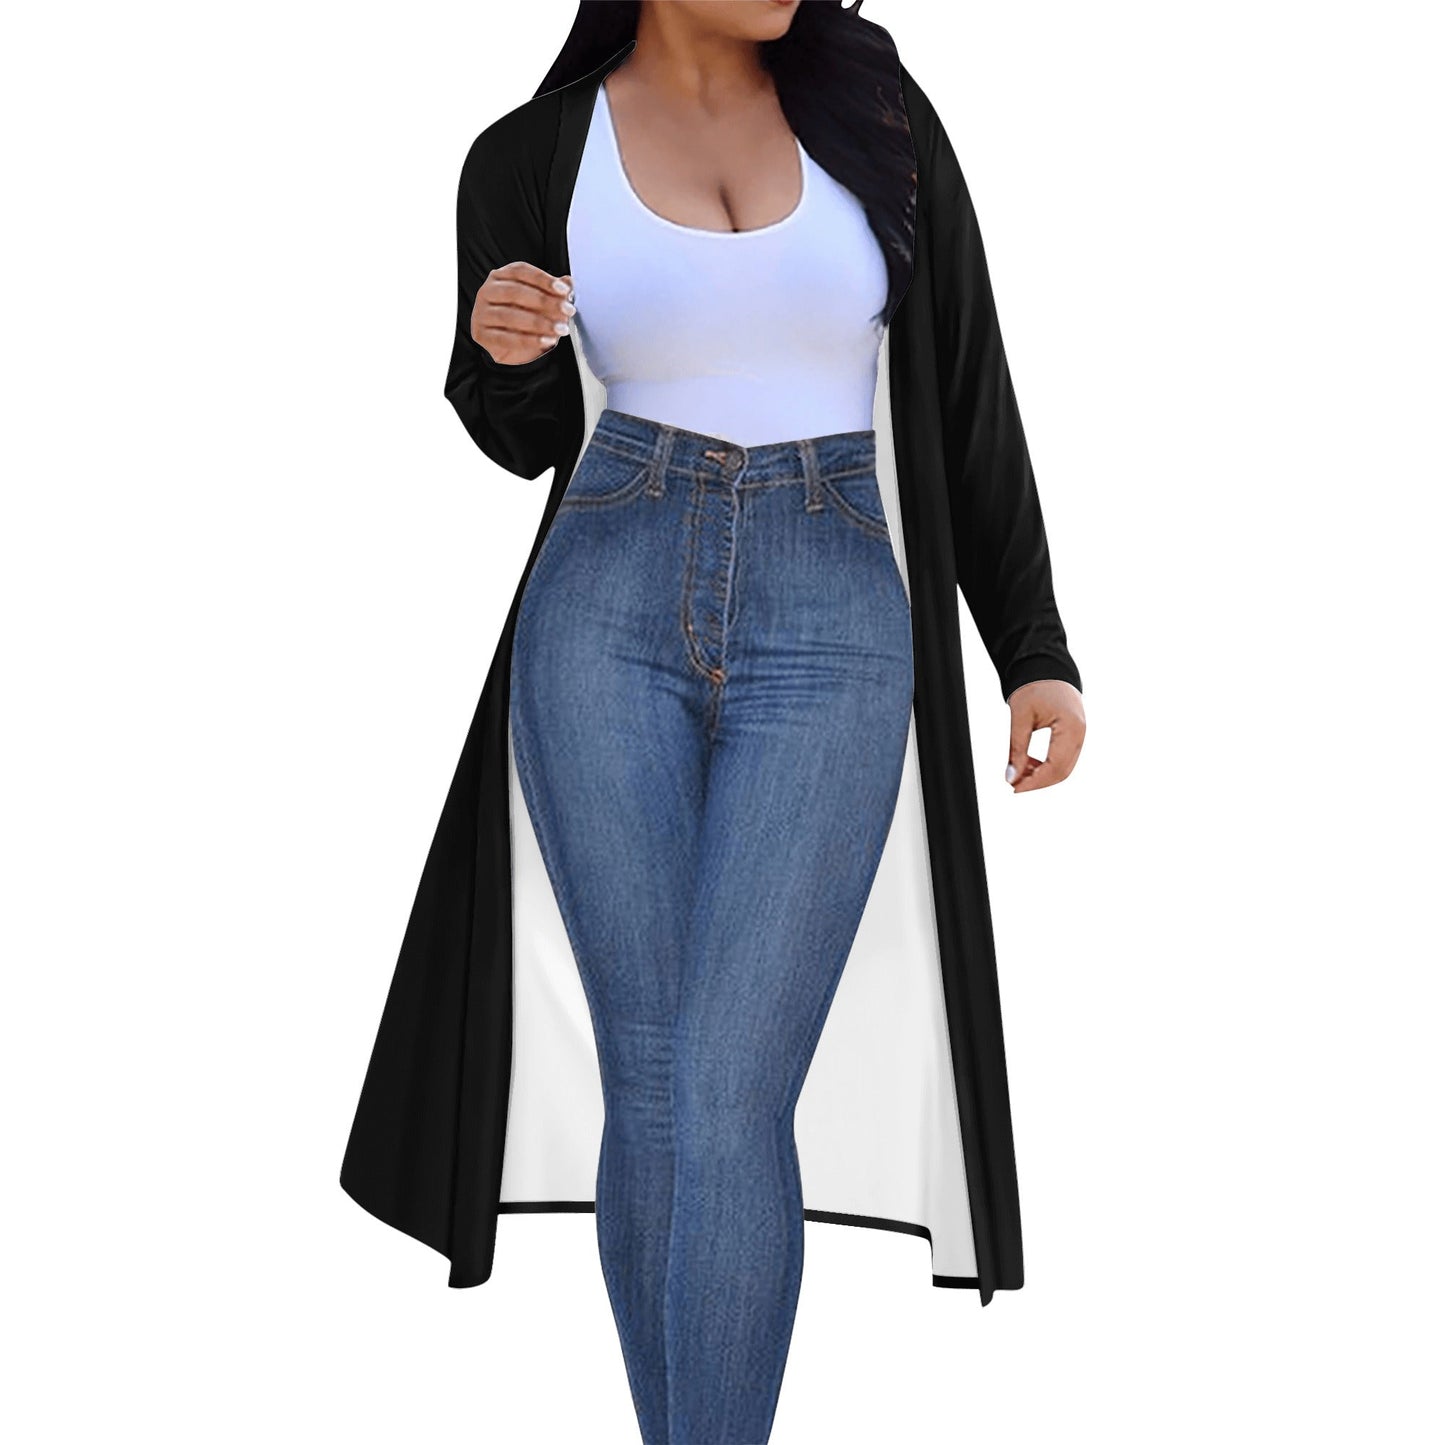 T4x Black Women's Long Sleeve Jacket Cardigan - T4x Quadruple Love